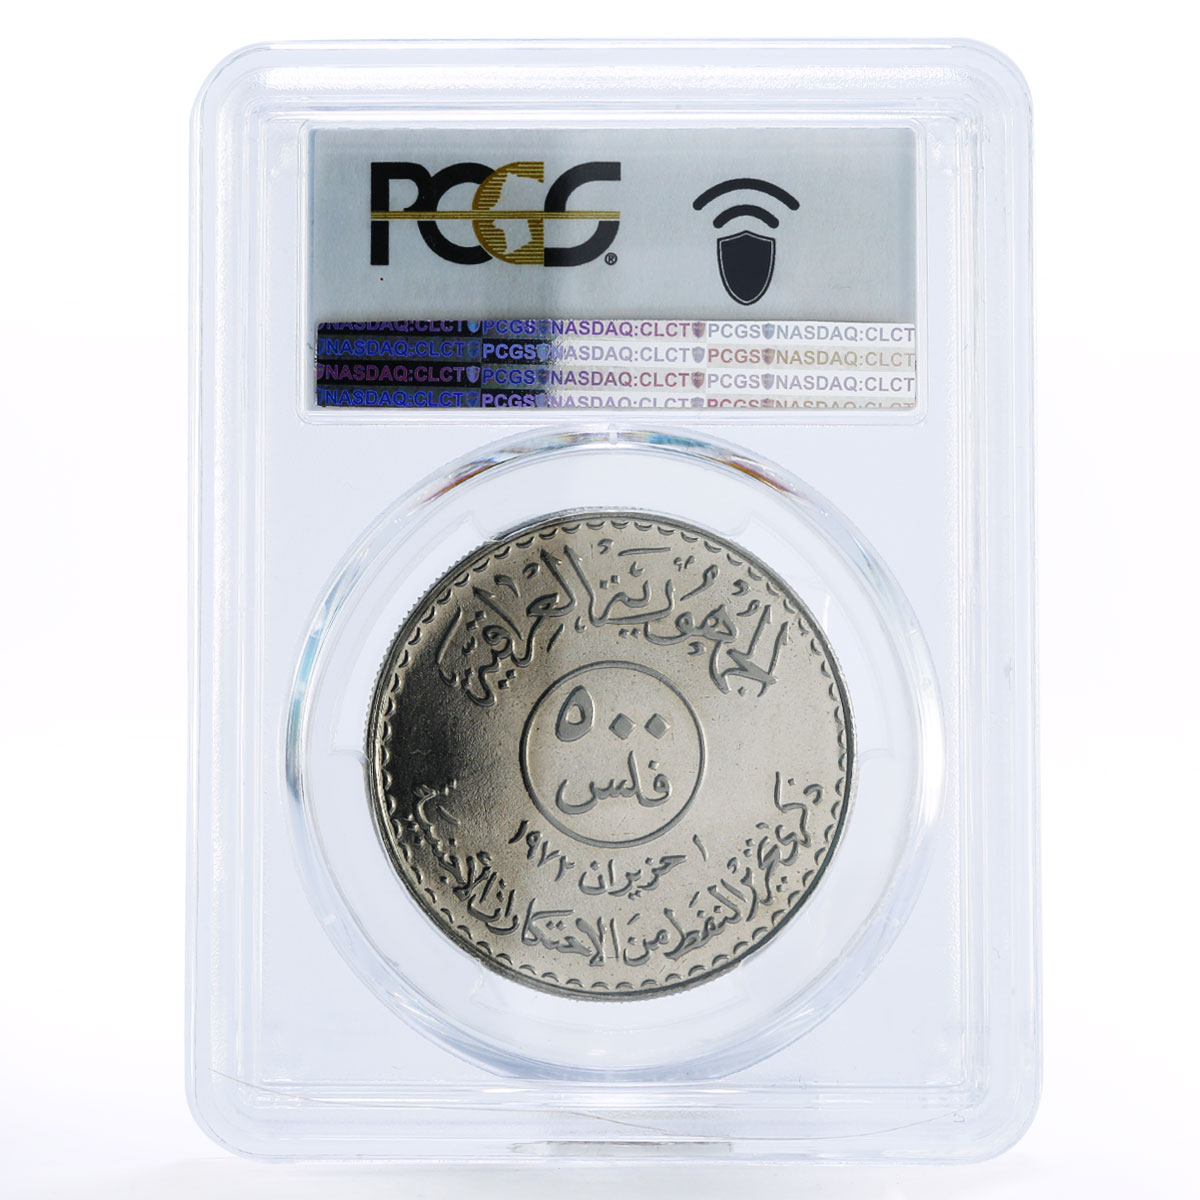 Iraq 500 fils Oil Nationalization Oil Refinery Plant PR67 PCGS nickel coin 1973